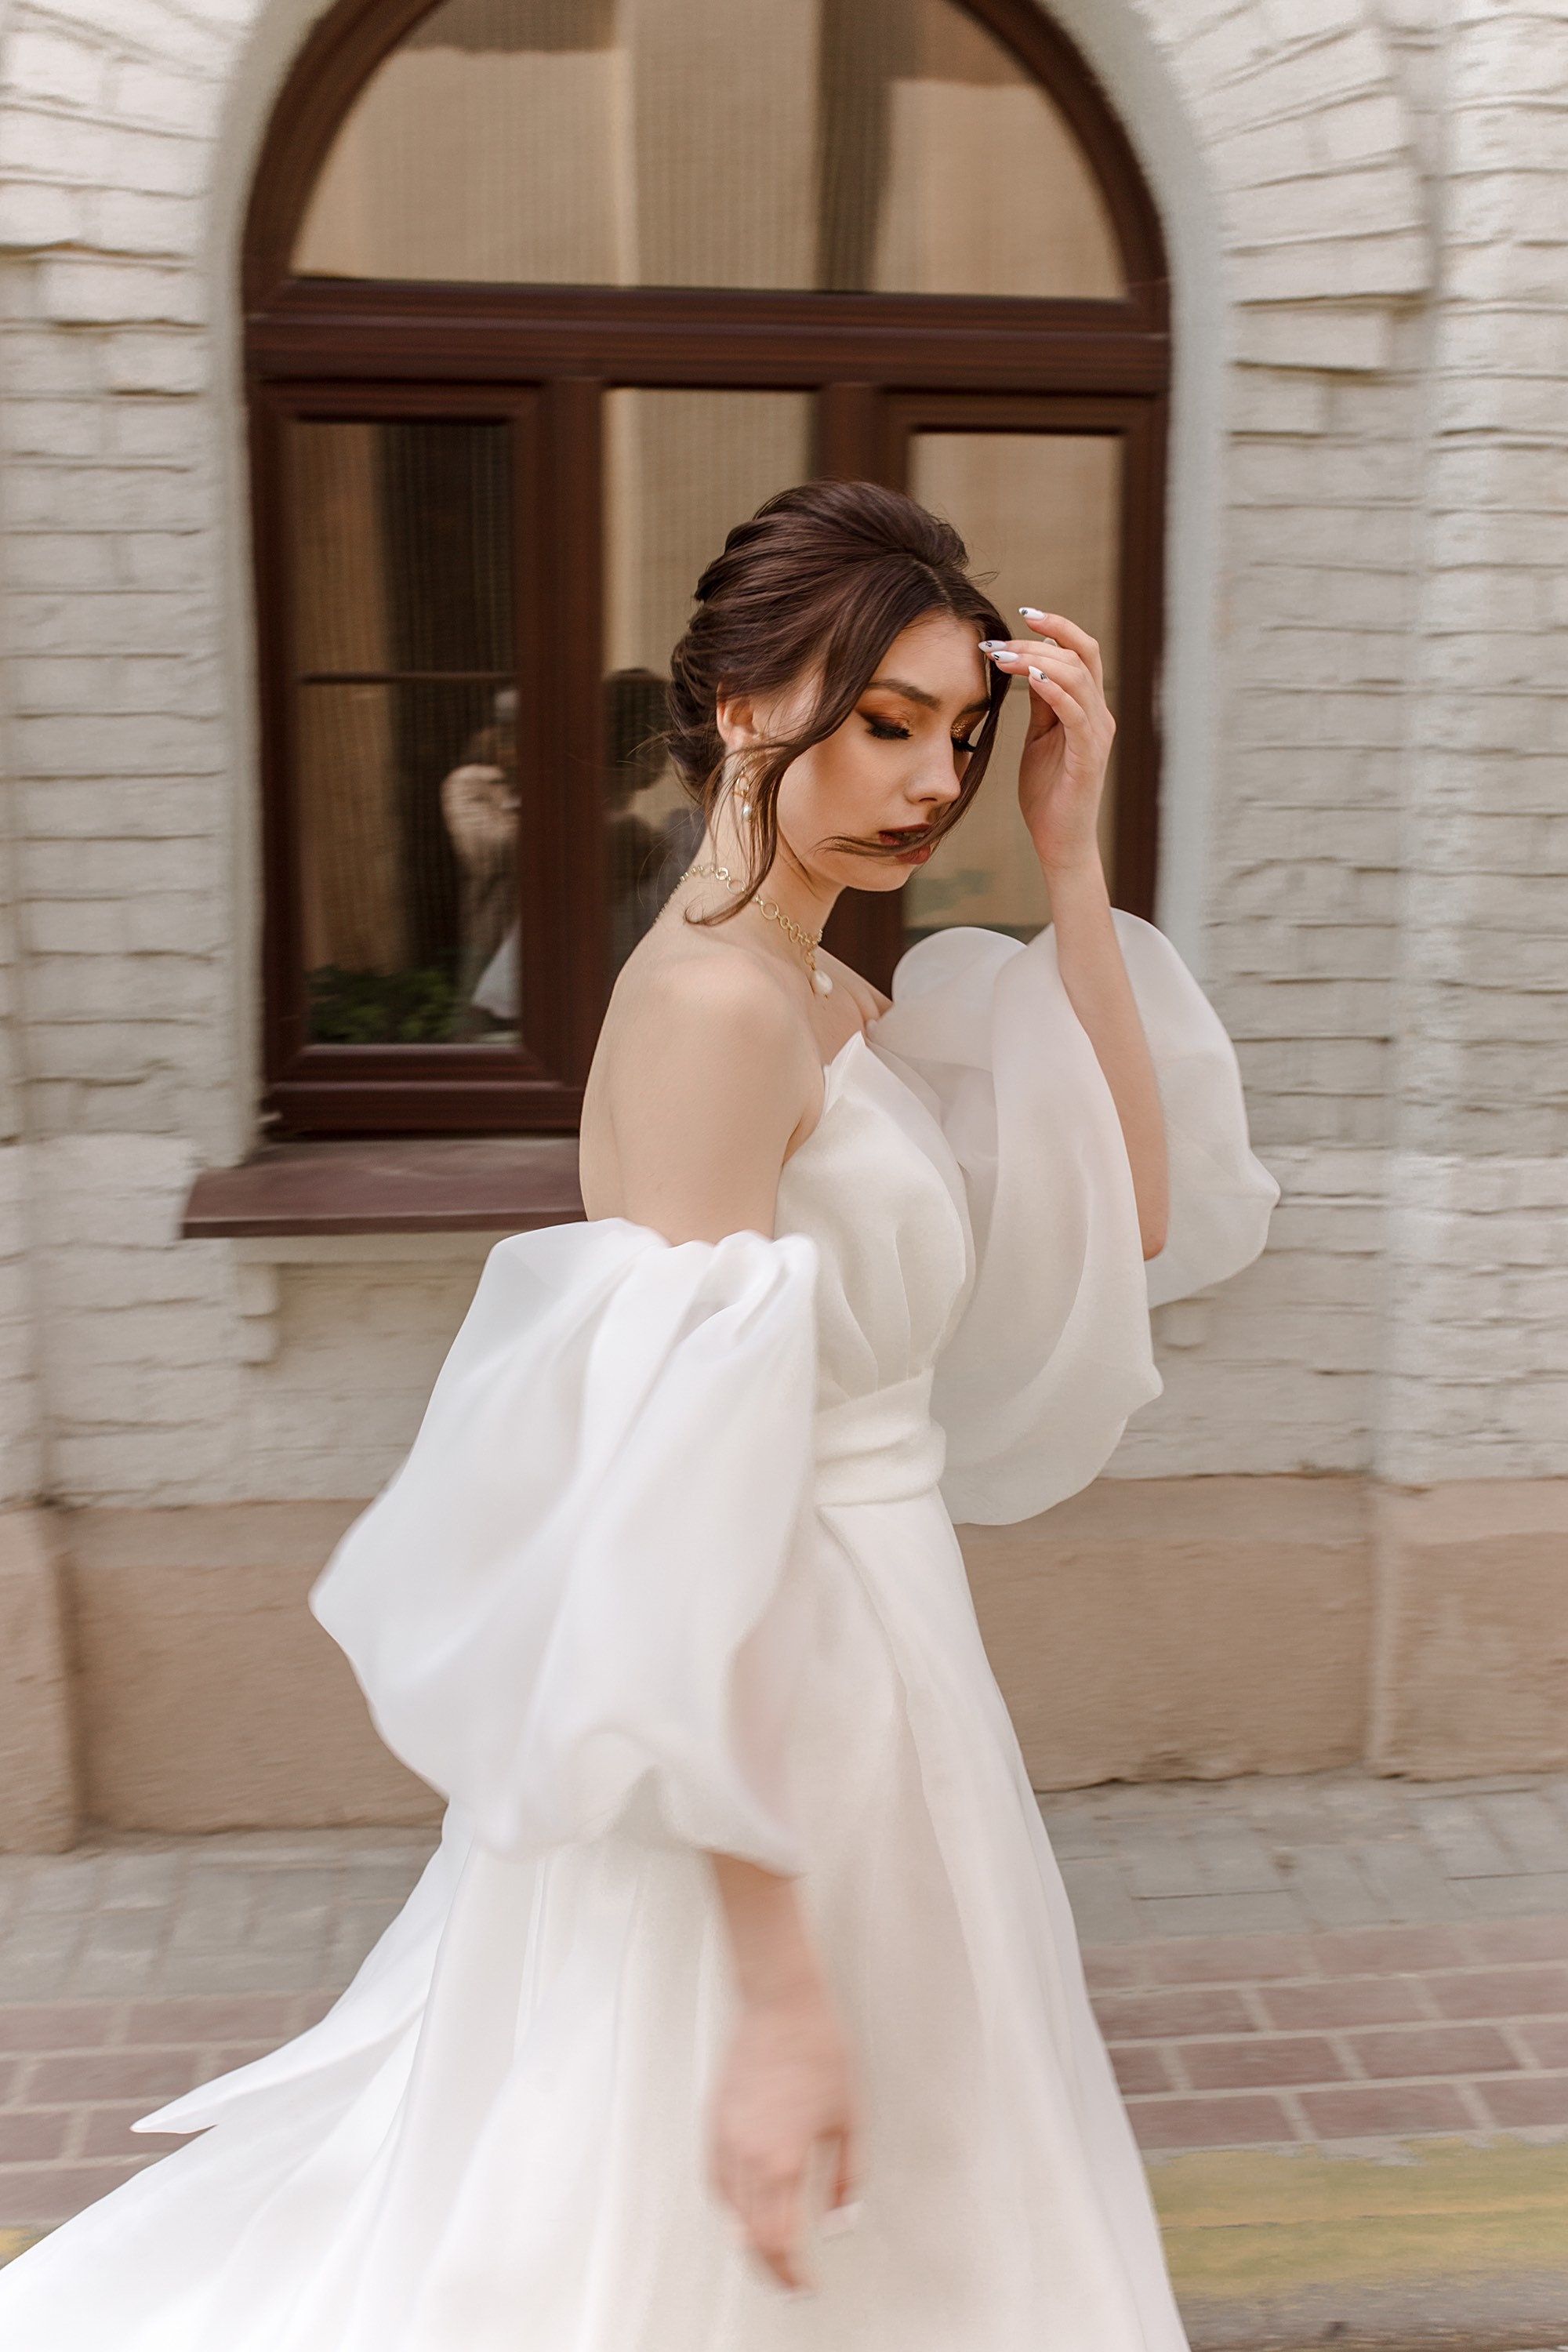 Exclusive fairytale wedding dress transformer / Corset Top / | Etsy